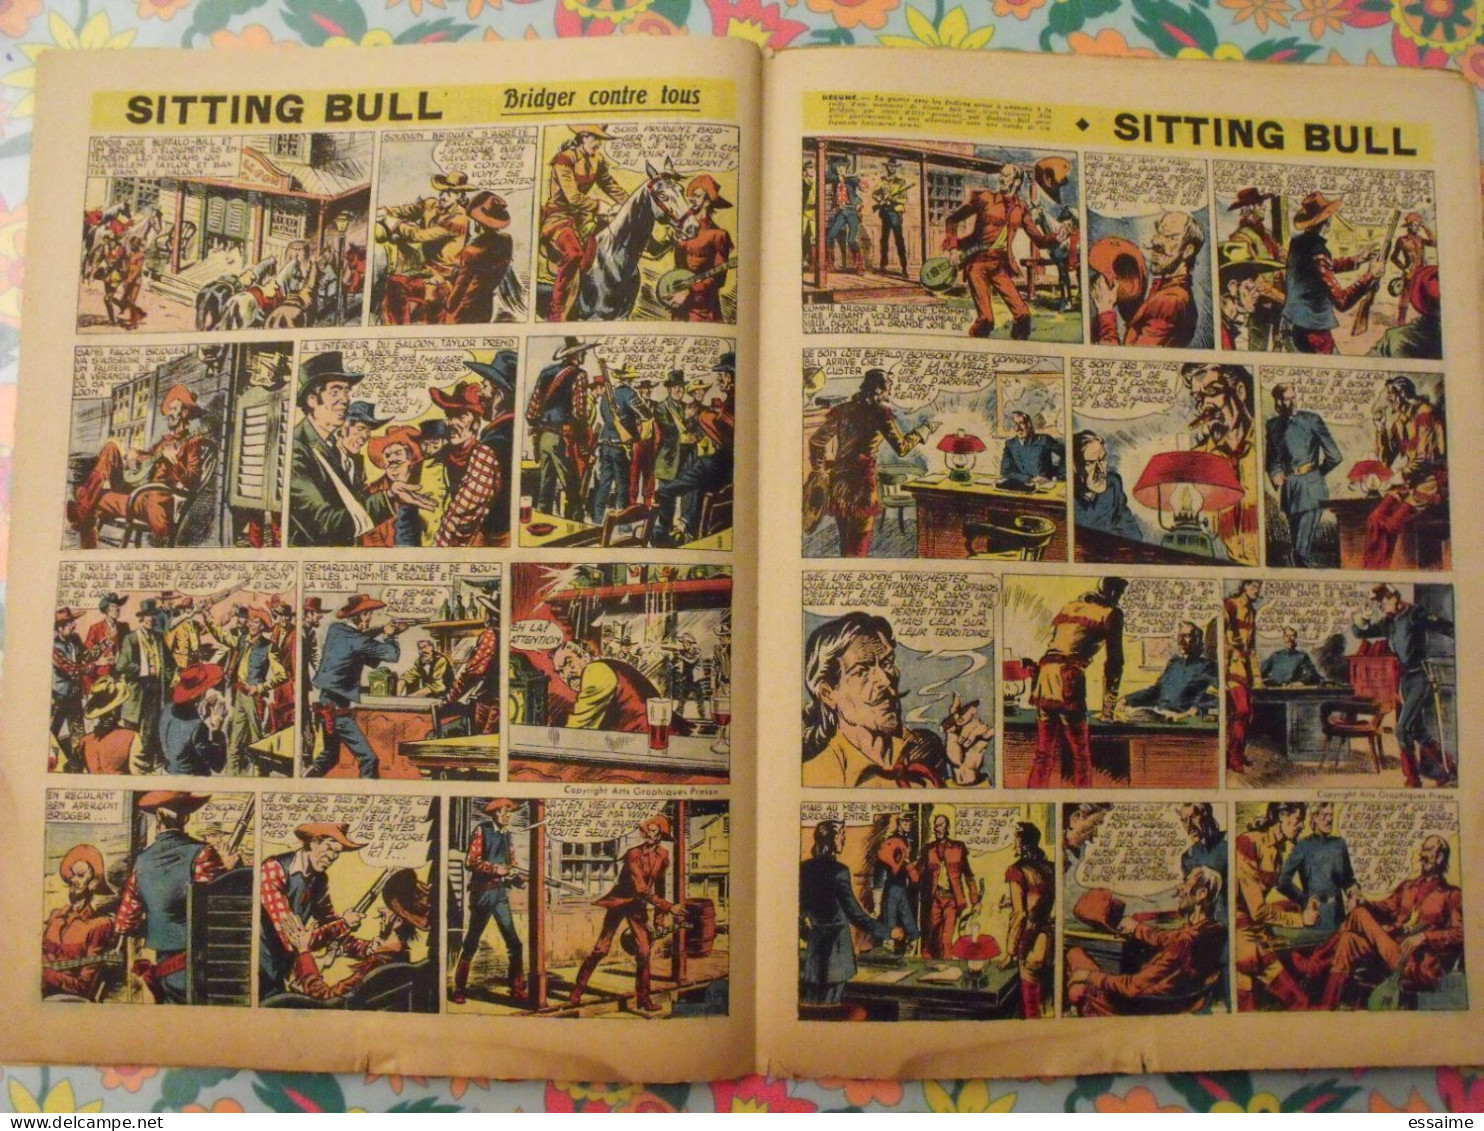 10 numéros de Coq Hardi de 1951. Sitting Bull, flamberge, roland, foufou, baby baluchon mat. A redécouvrir